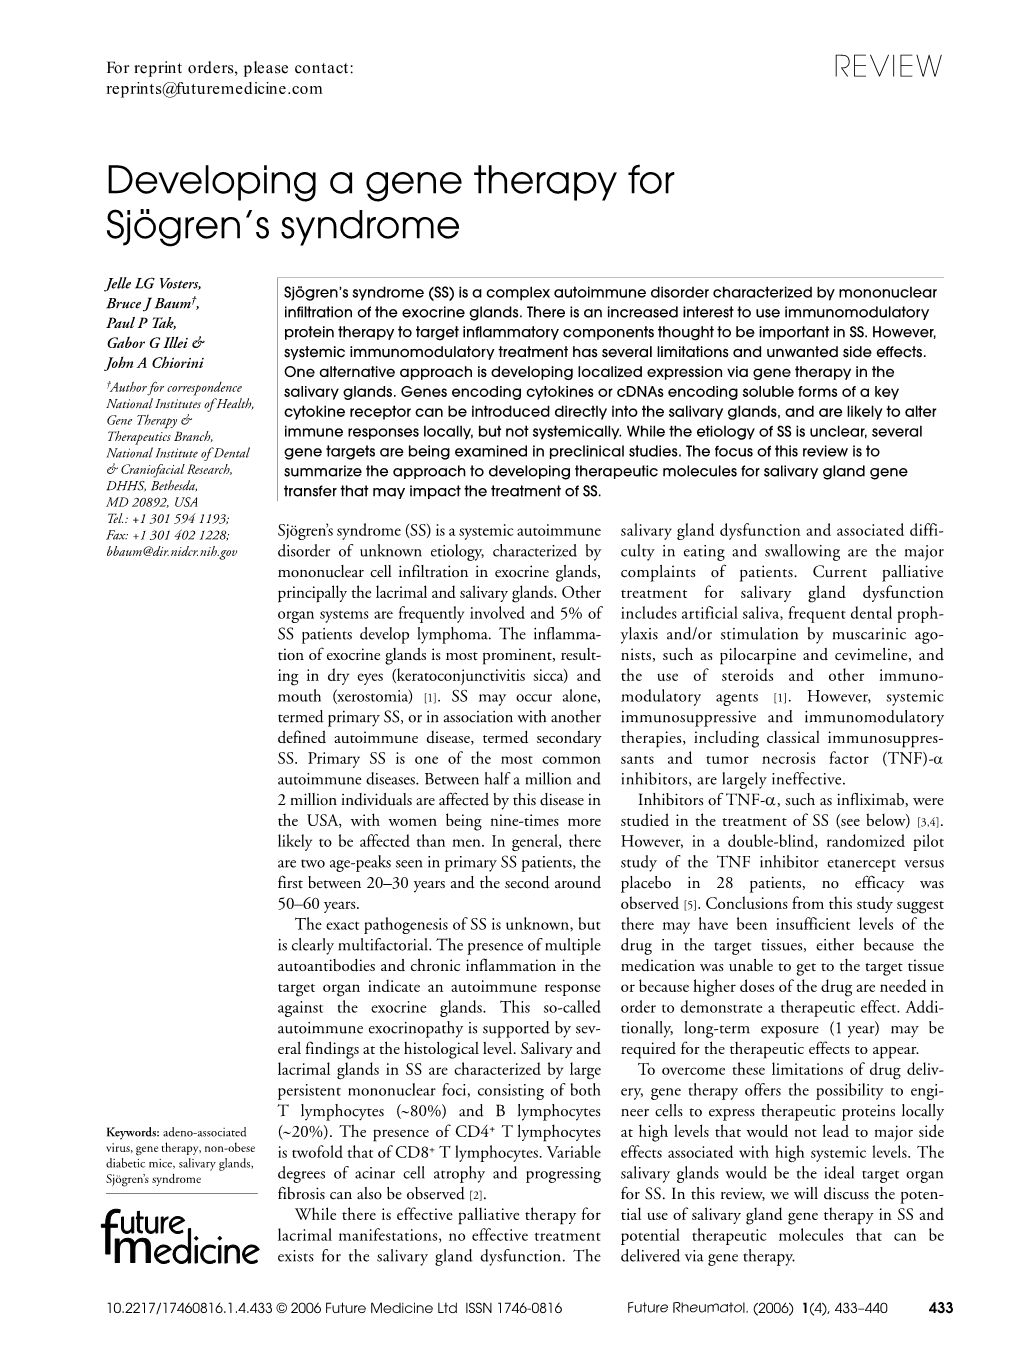 Developing a Gene Therapy for Sjogren